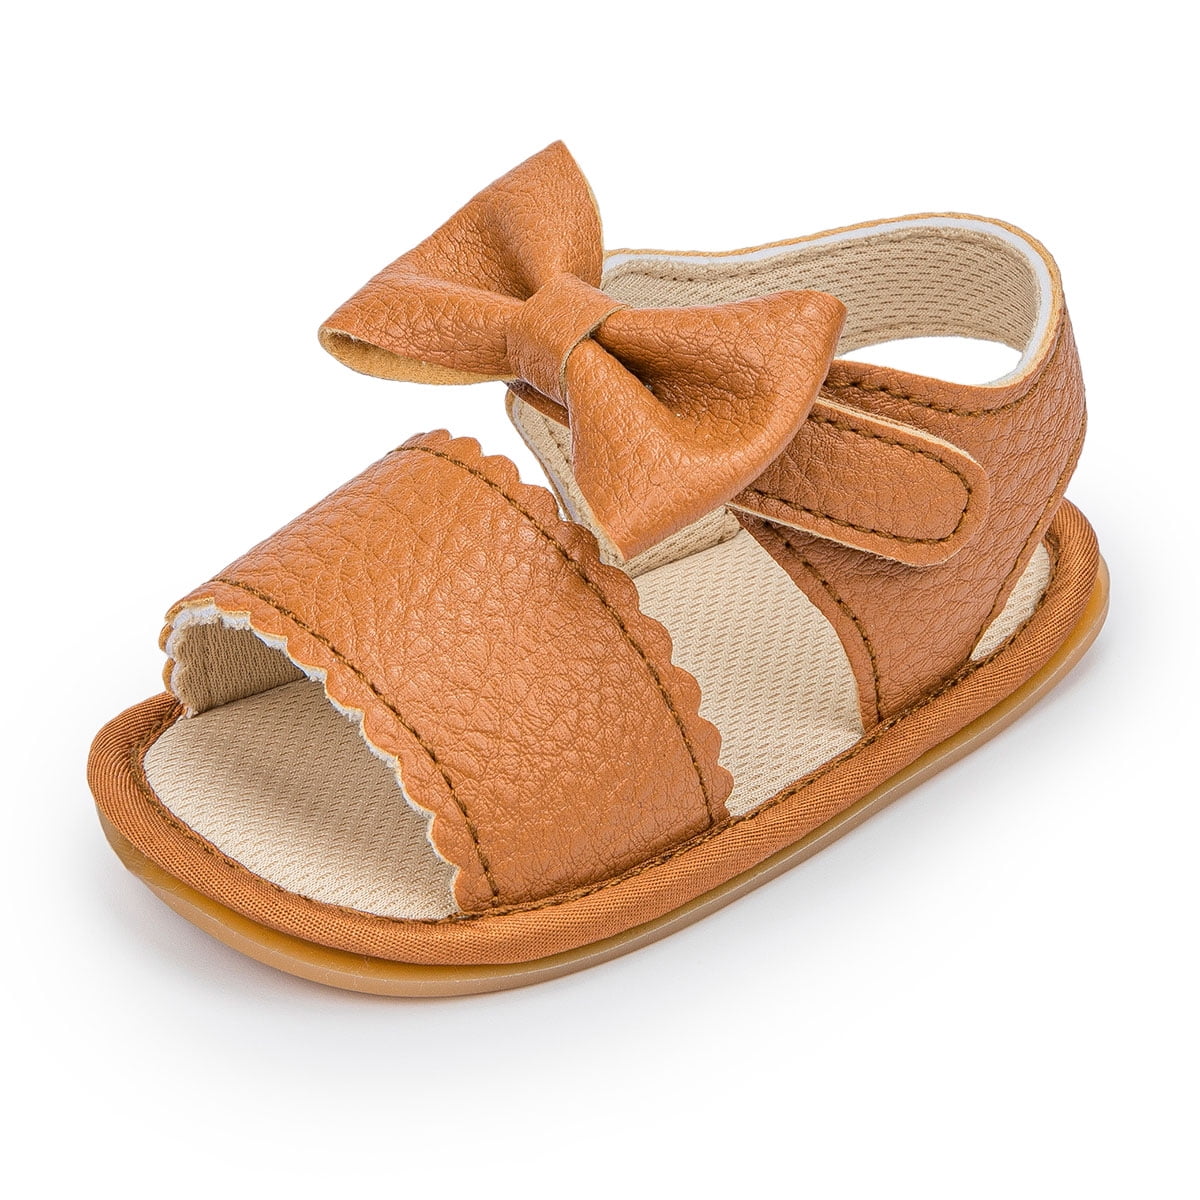 Meckior Infant Baby Girls Sandals Summer Soft Leather No-Slip Princess Shoes